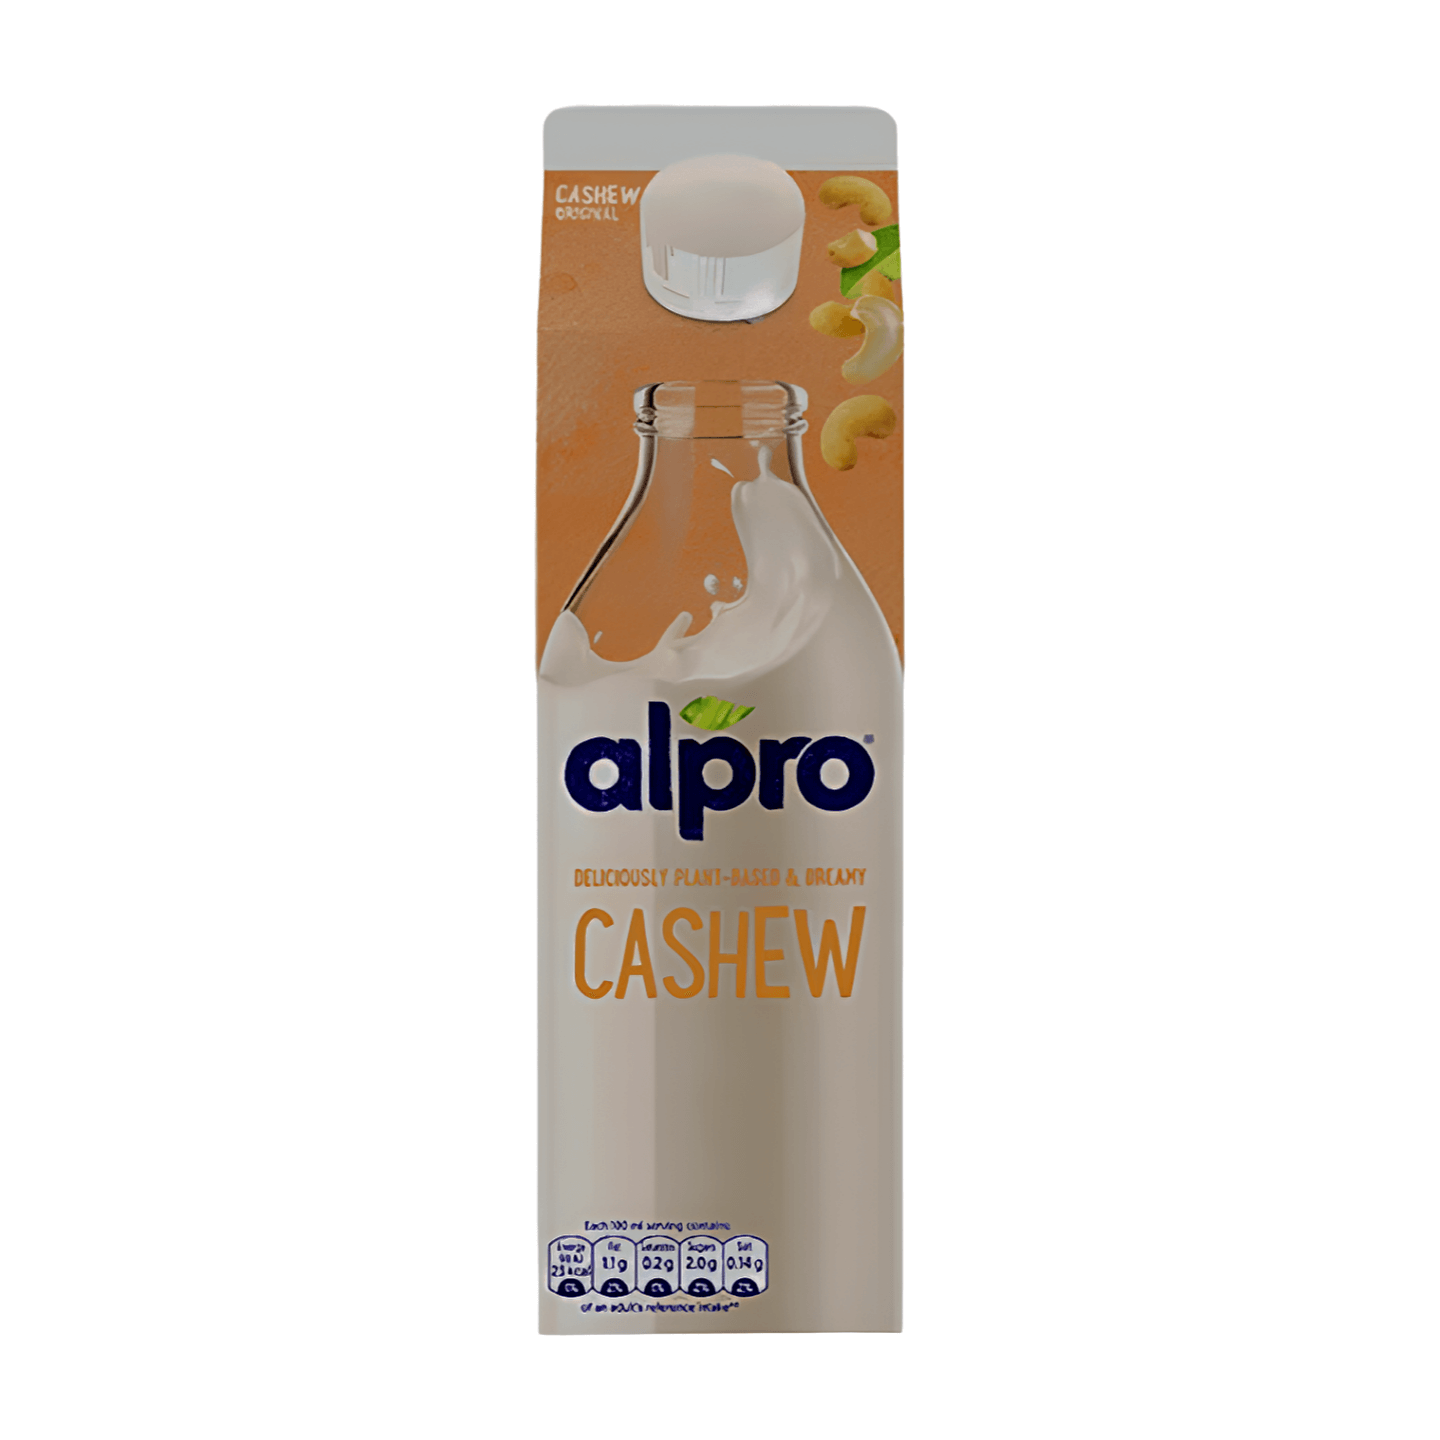 Alpro Cashew Original Chilled